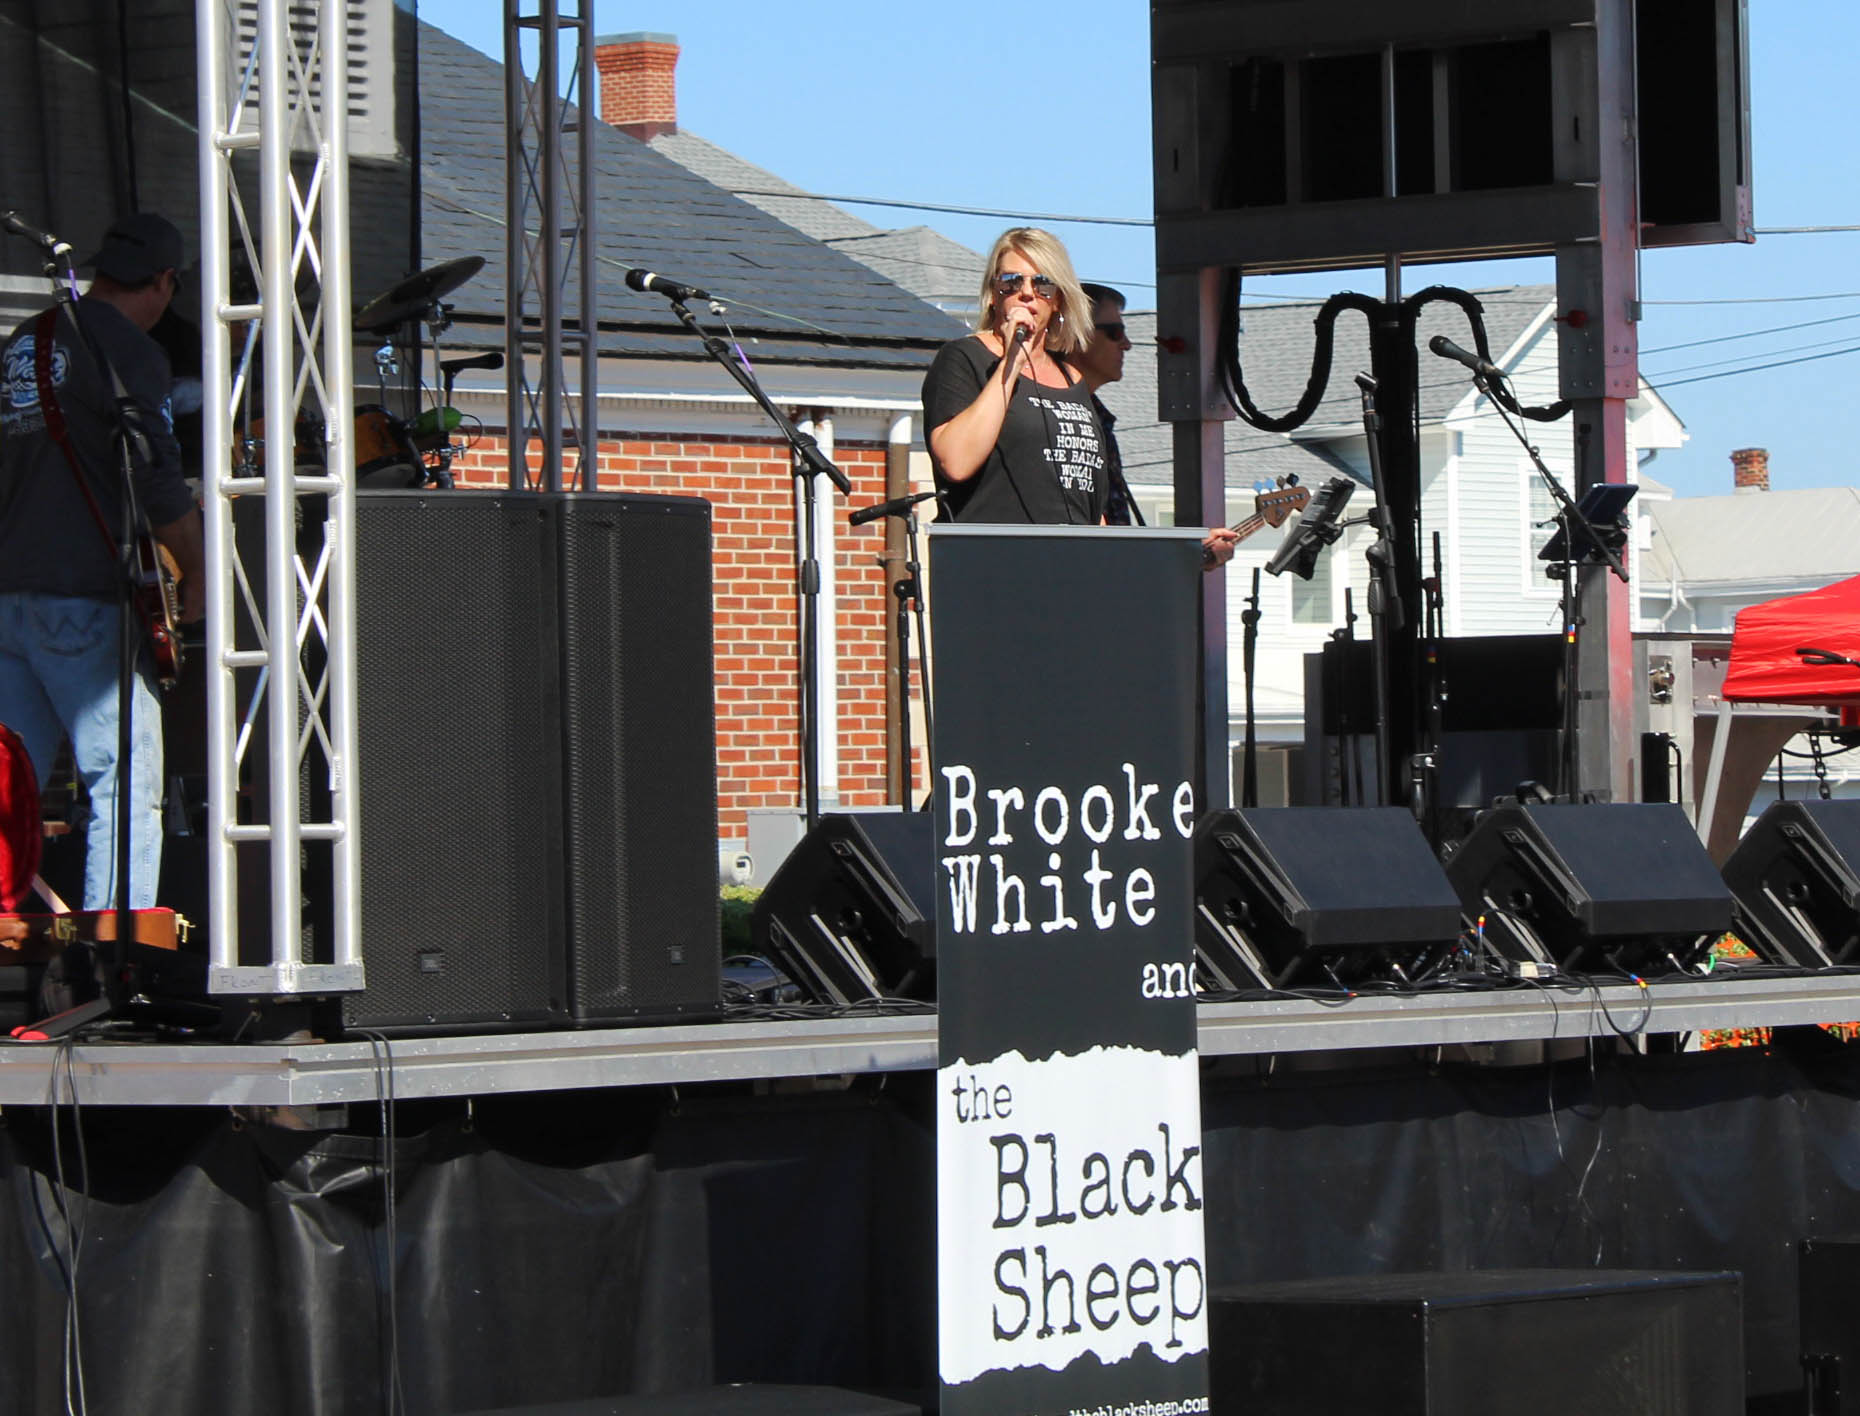 Brooke White and the Black Sheep